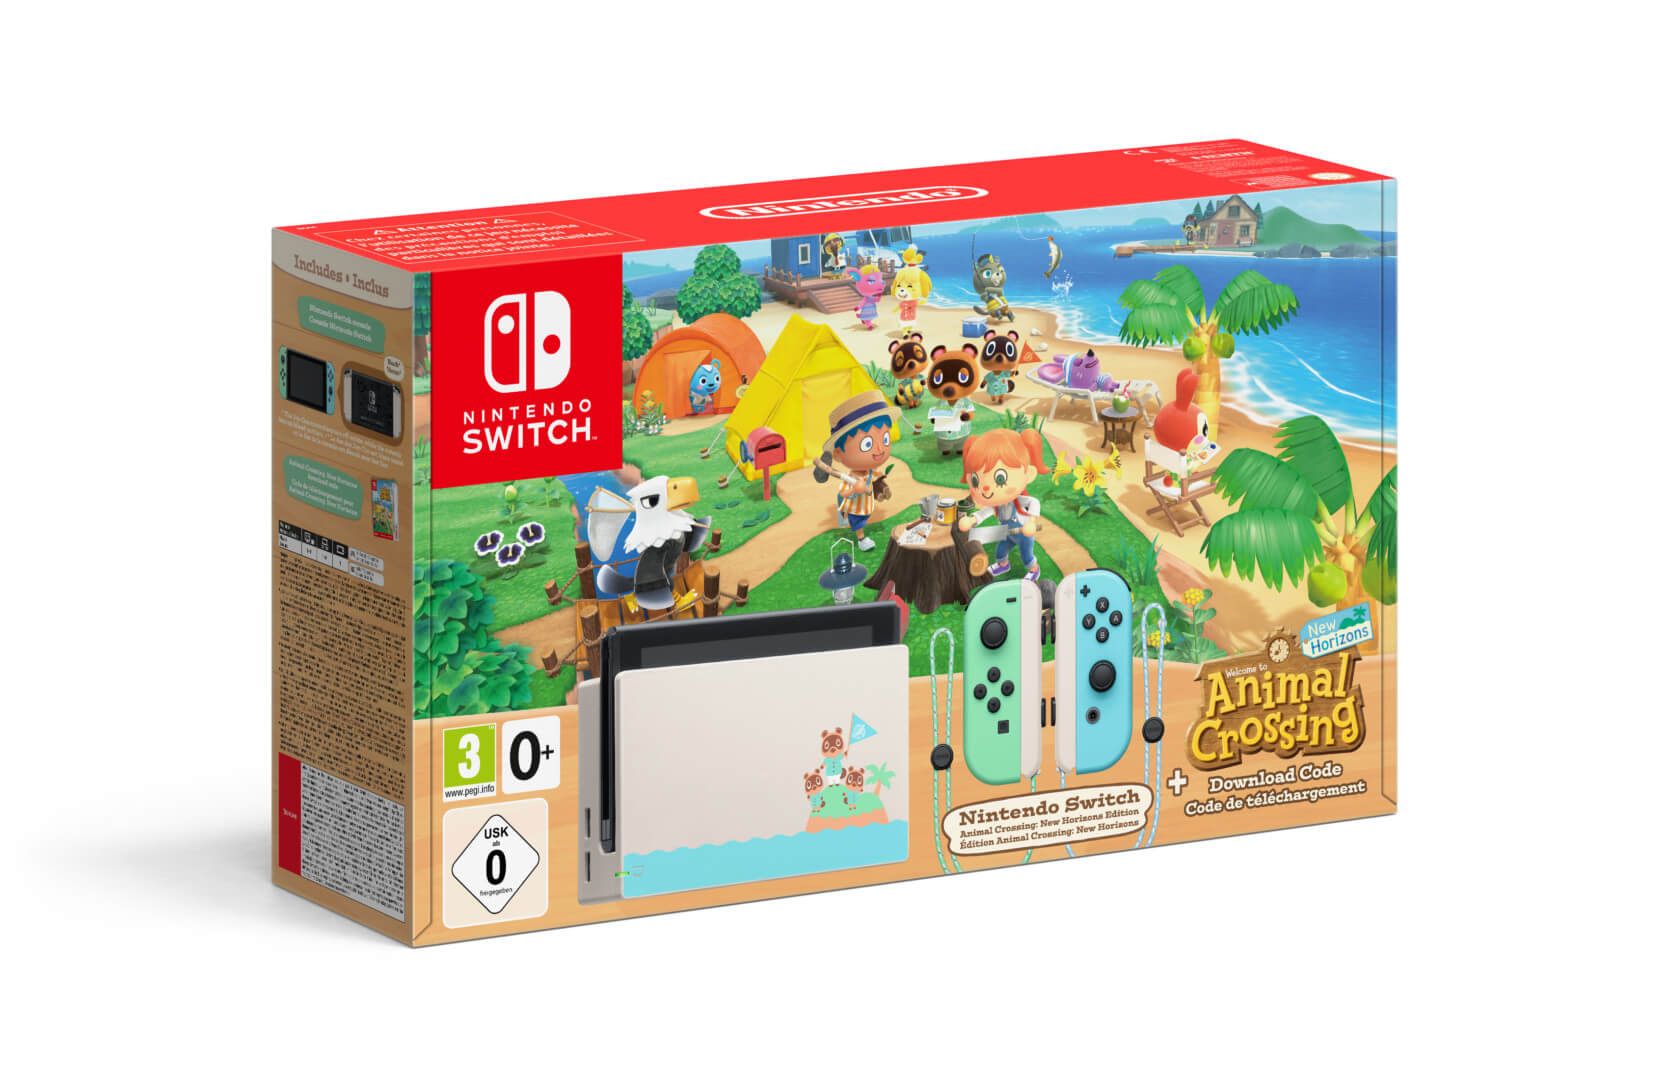 5 Nintendo Switch Animal Crossing New Horizons Edition Joycon Pack